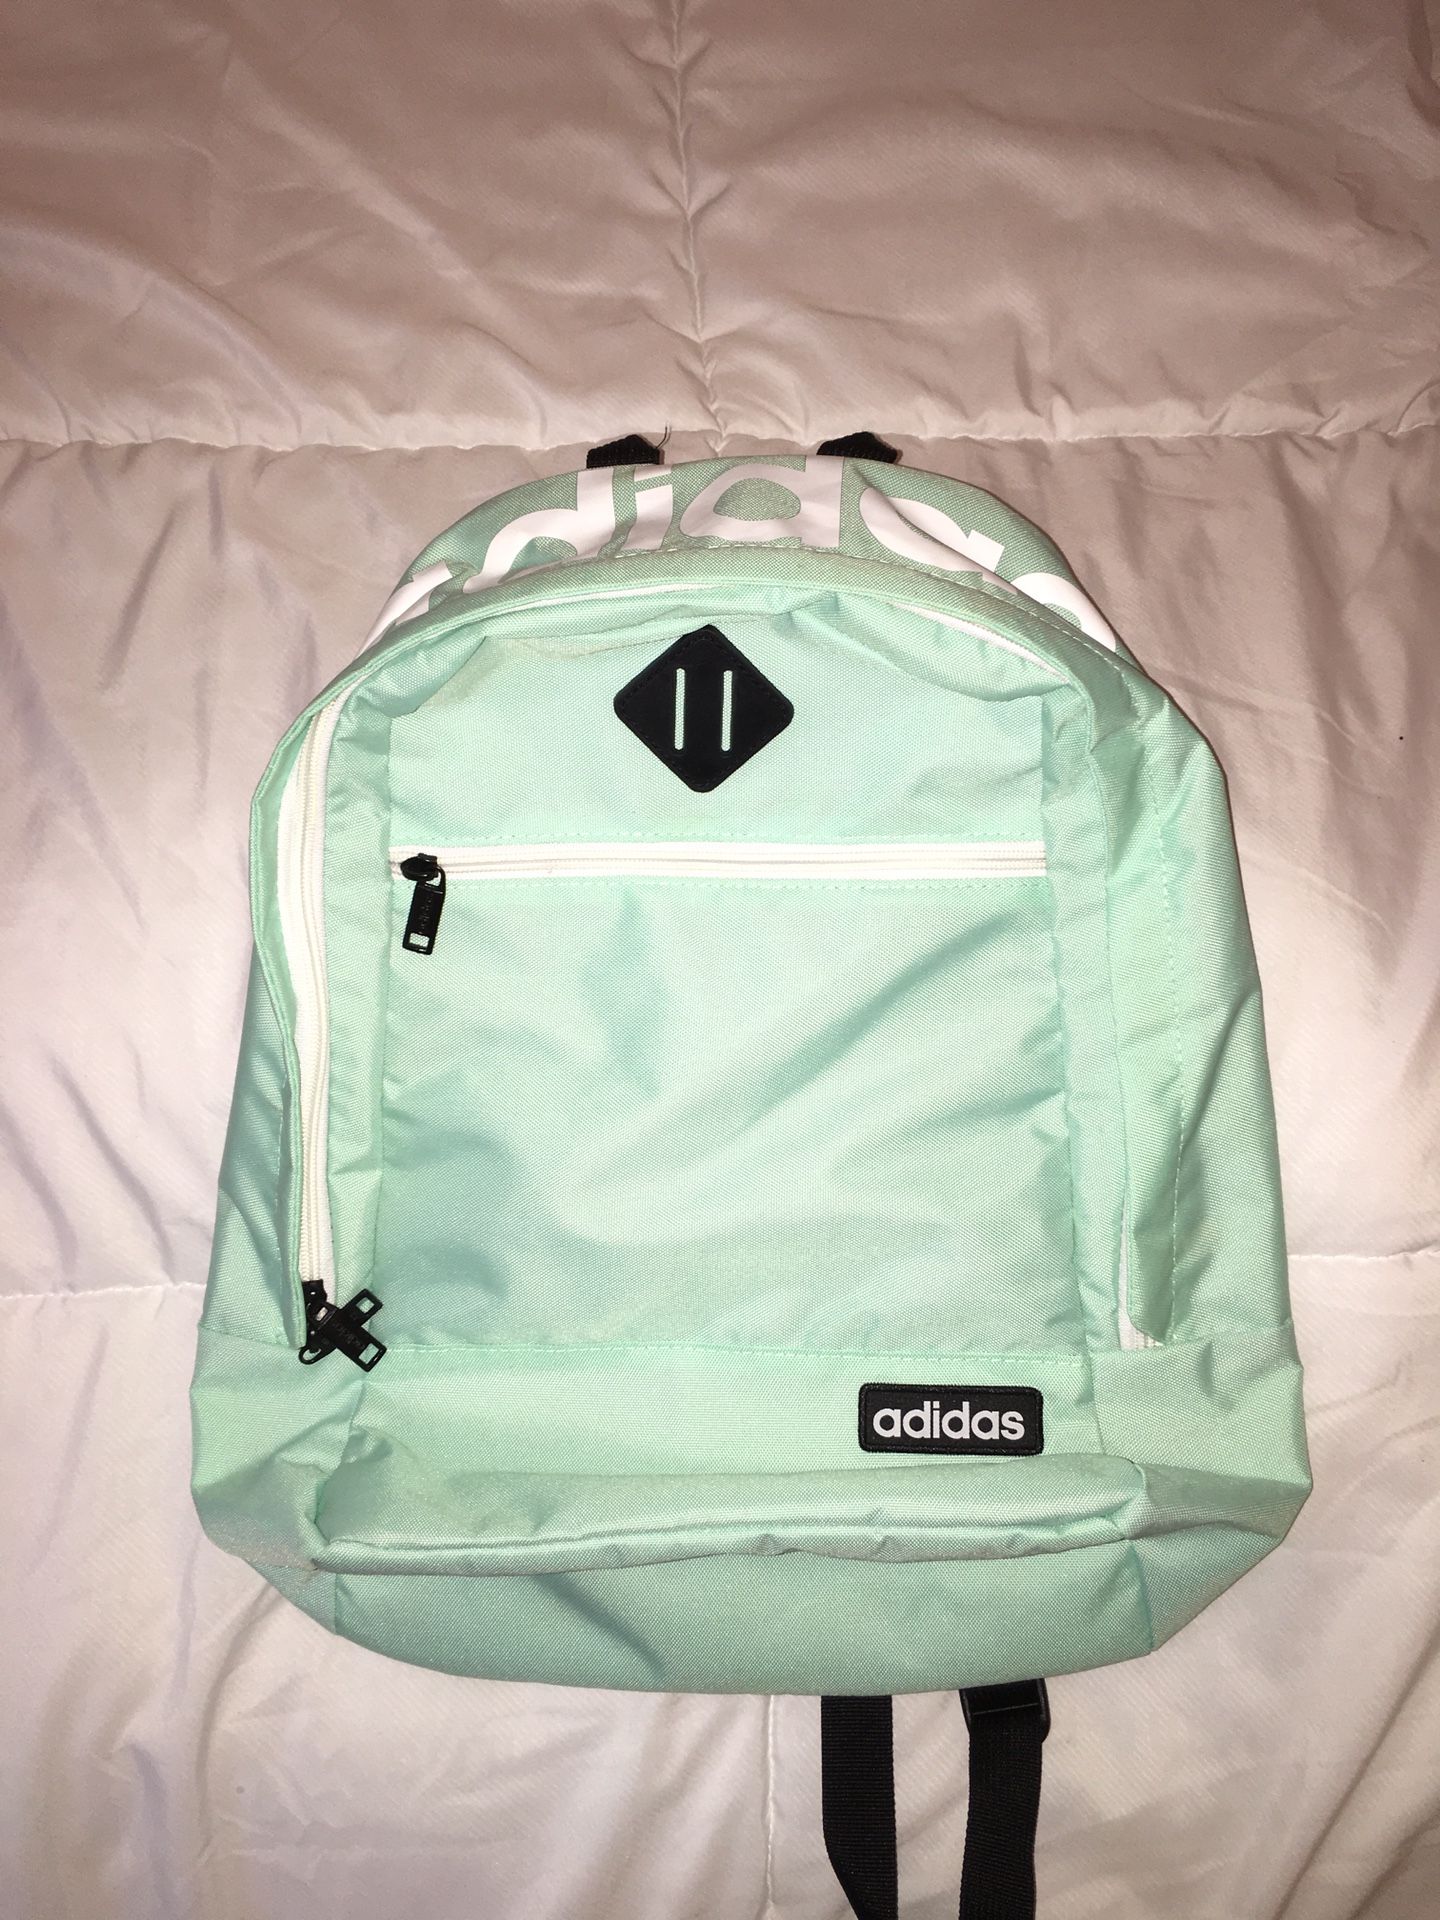 Backpack (Adidas)